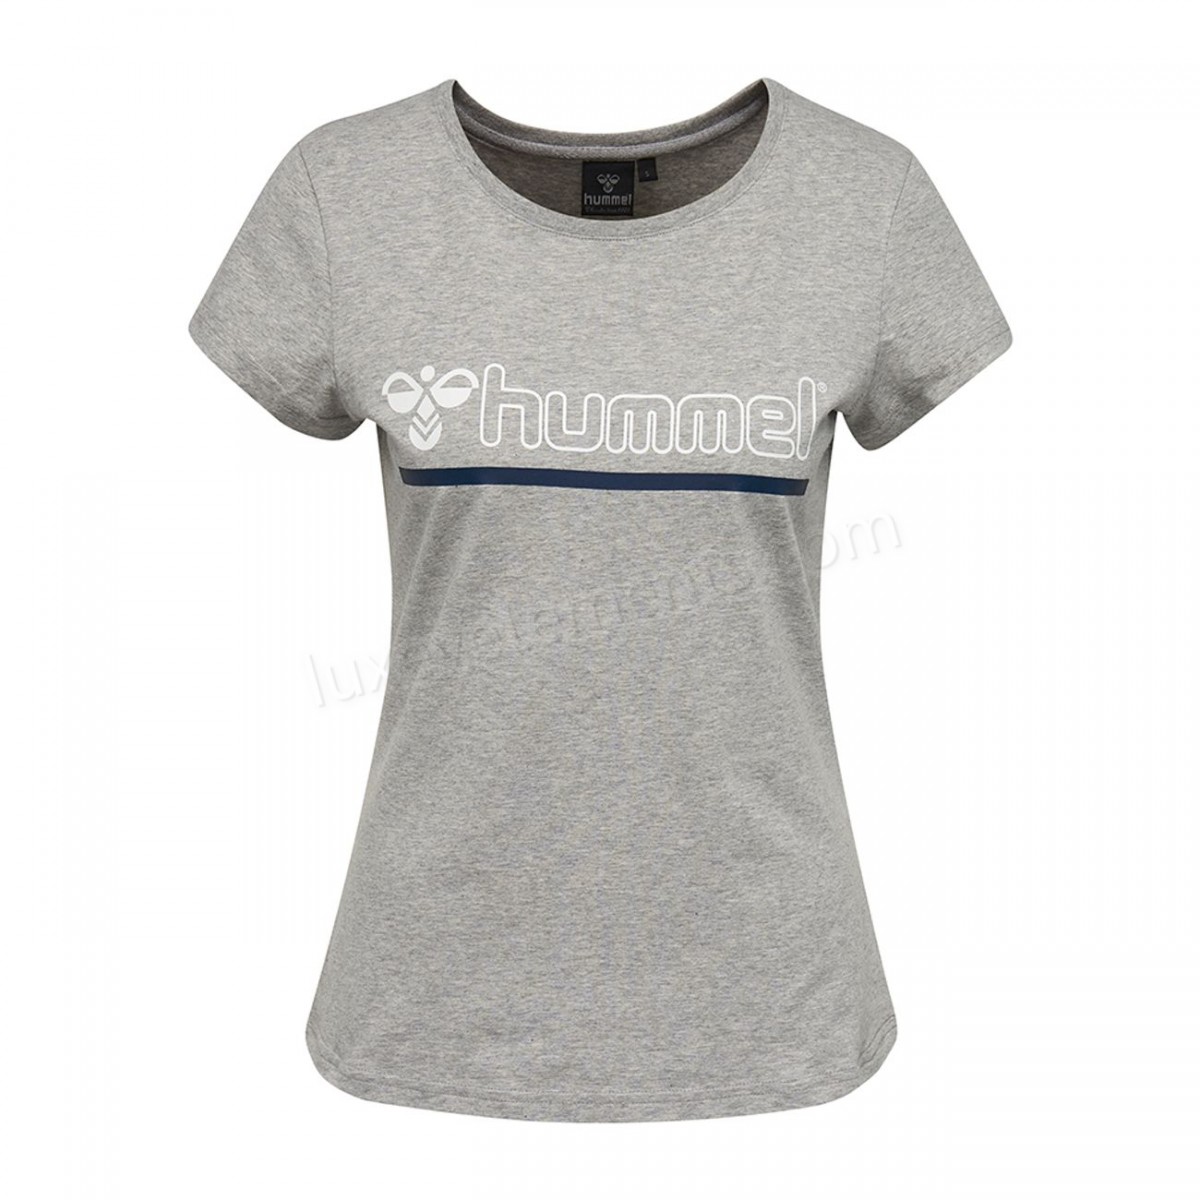 Hummel-Fitness femme HUMMEL T-shirt femme Hummel Classic bee Perla Vente en ligne - -7